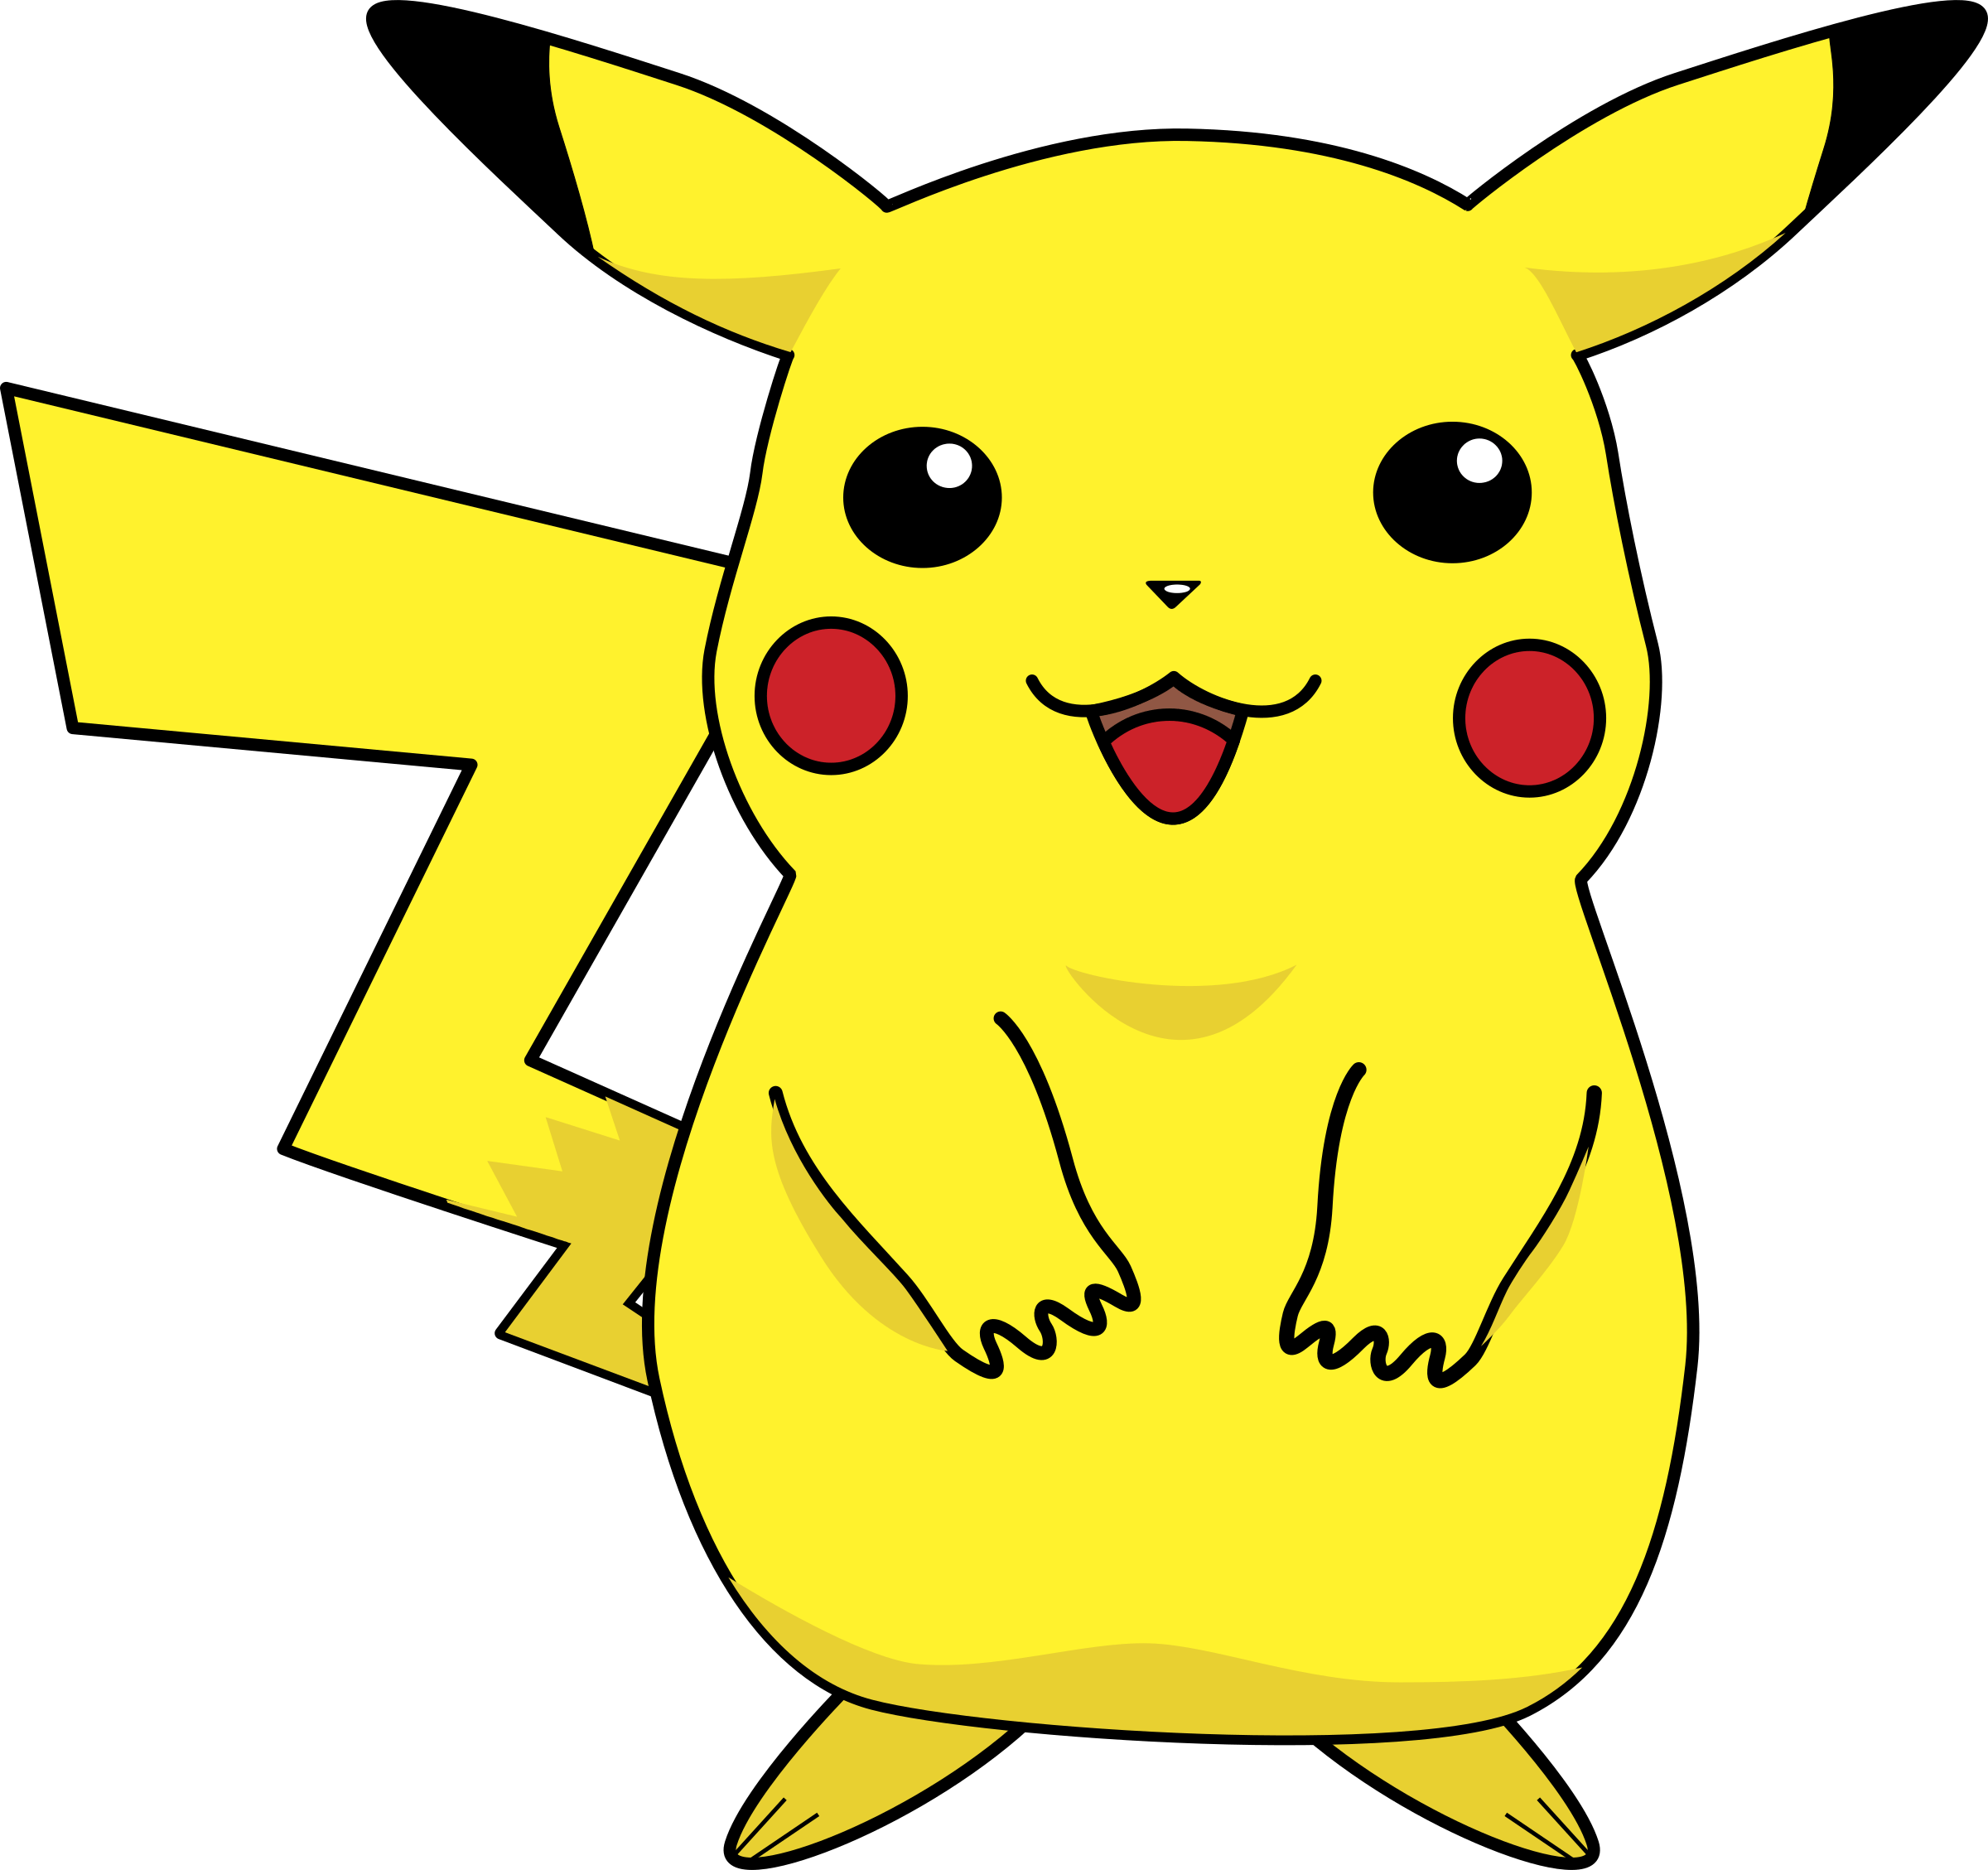 Pokemon Logo - Pokemon Logo PNG Transparent & SVG Vector - Freebie Supply